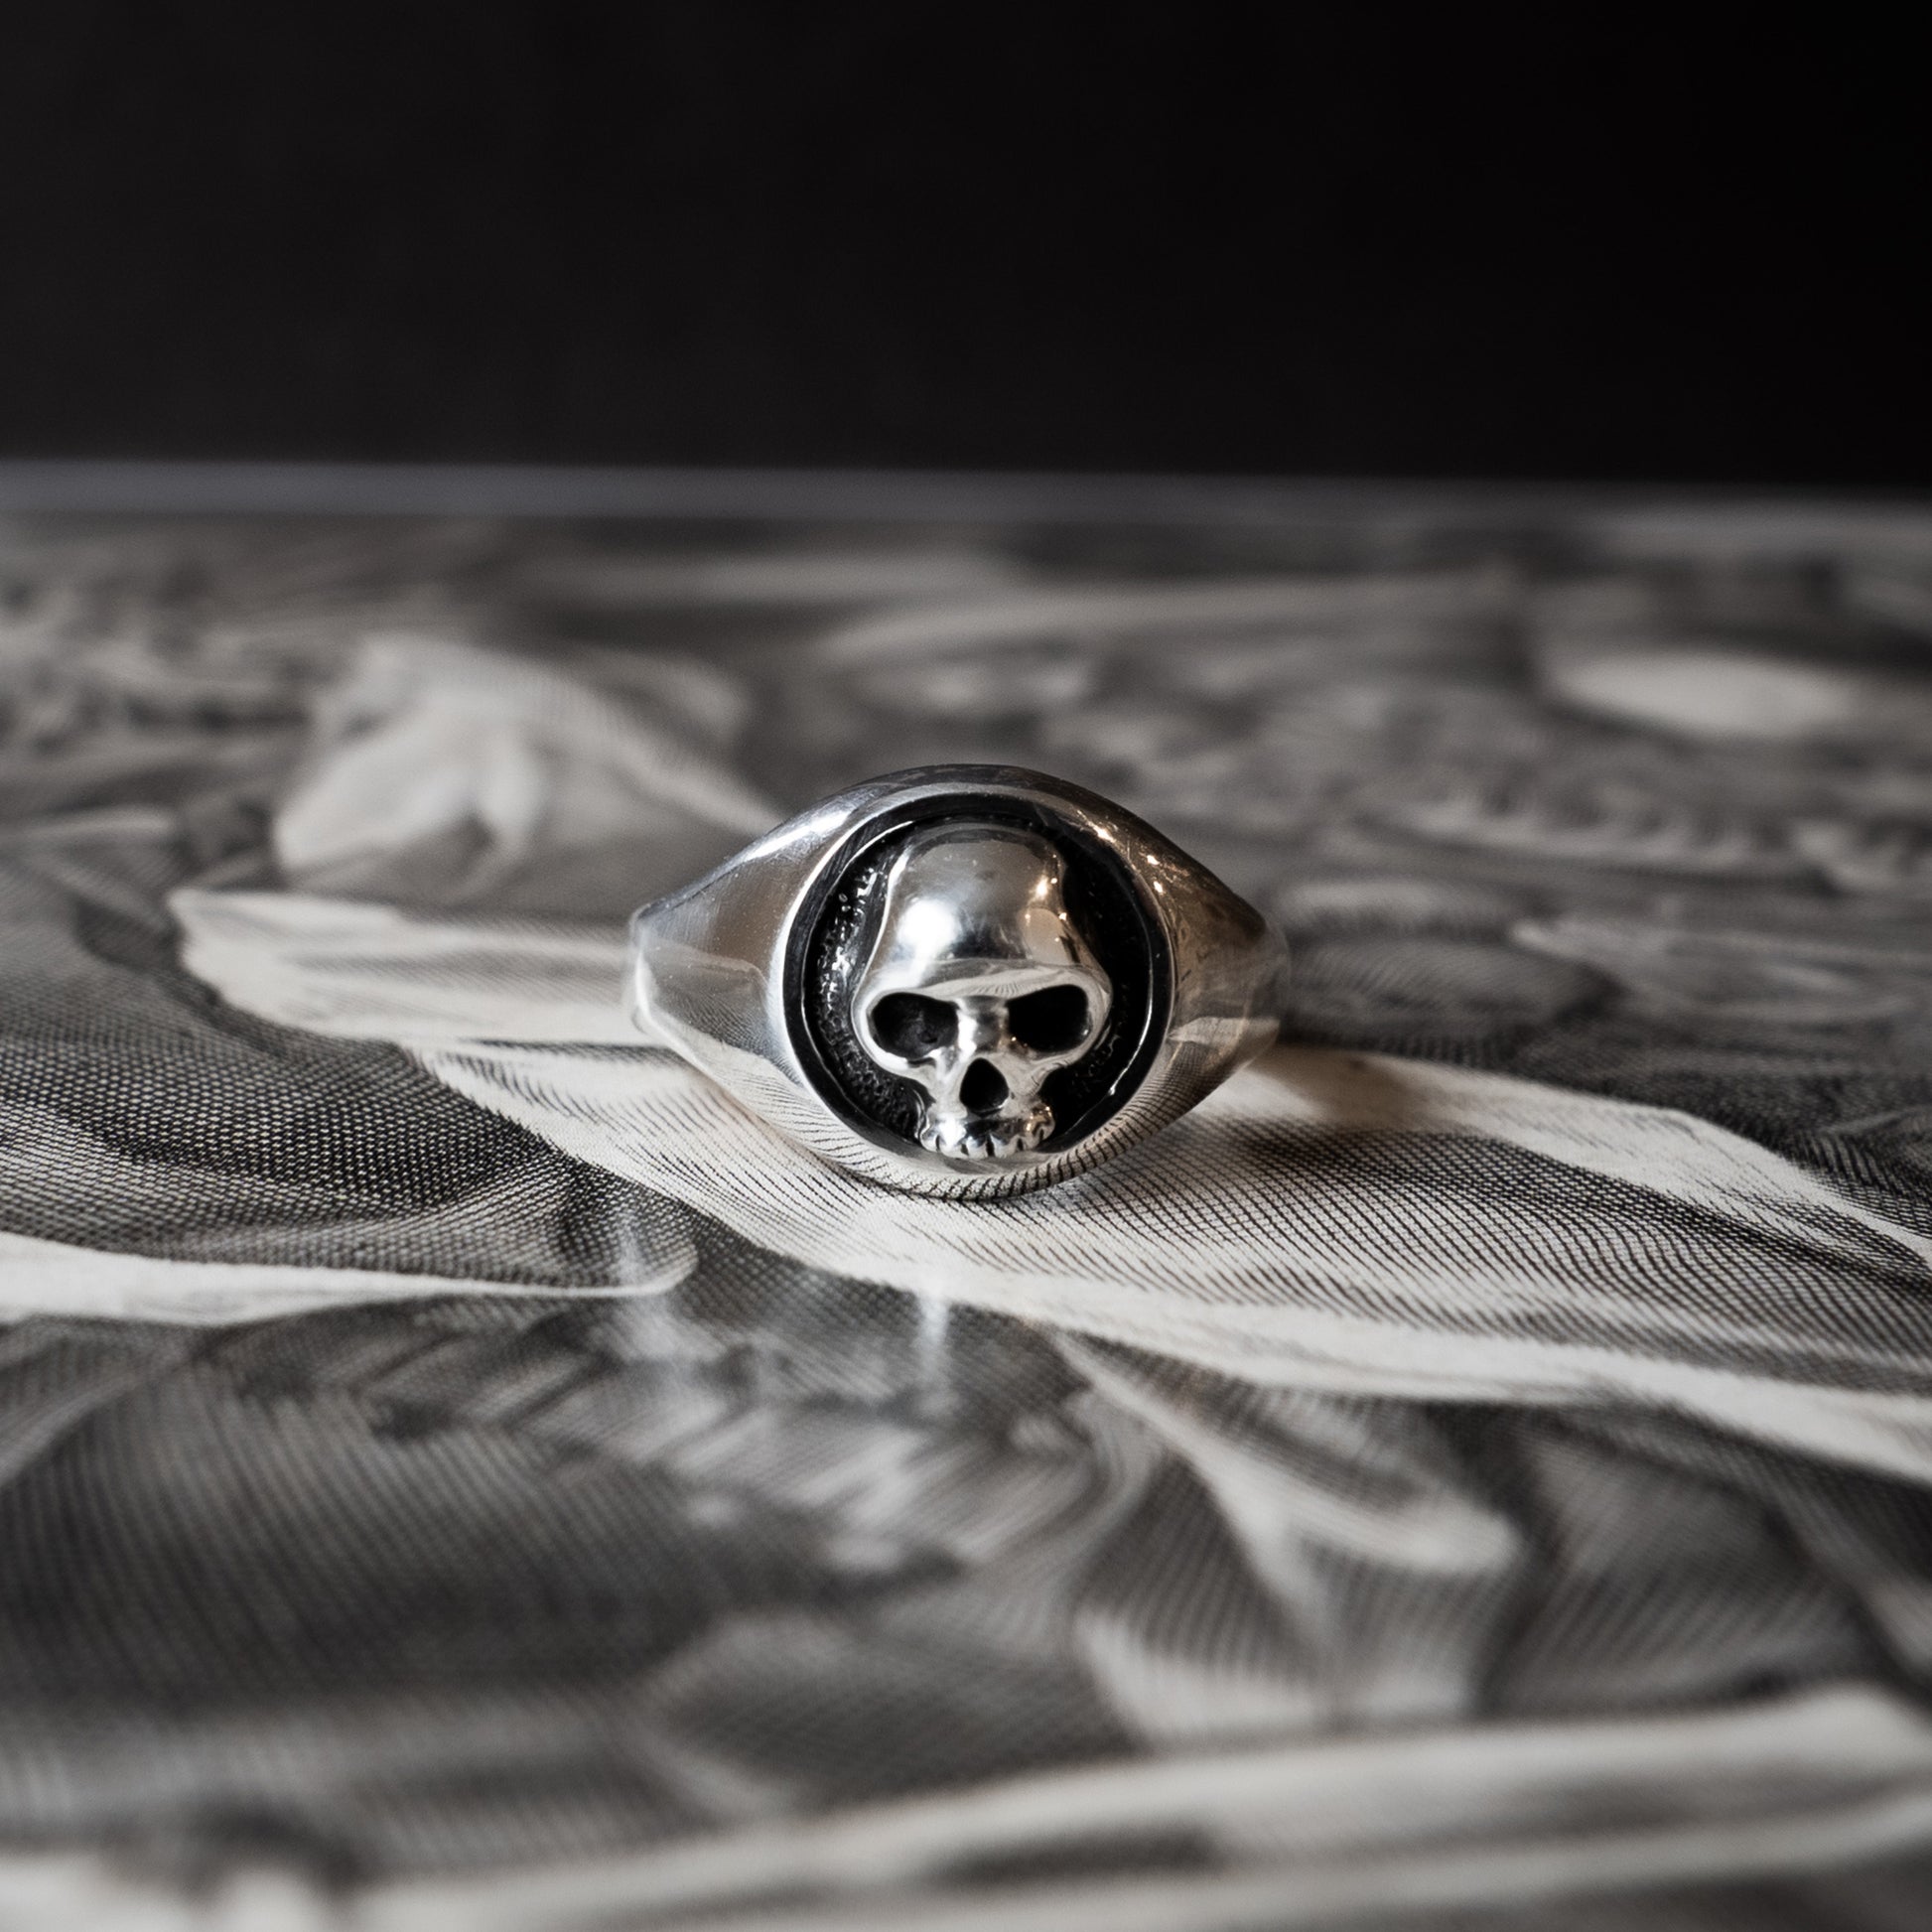 Skull Signet Ring in Sterling Silver *New* - Futaba Hayashi